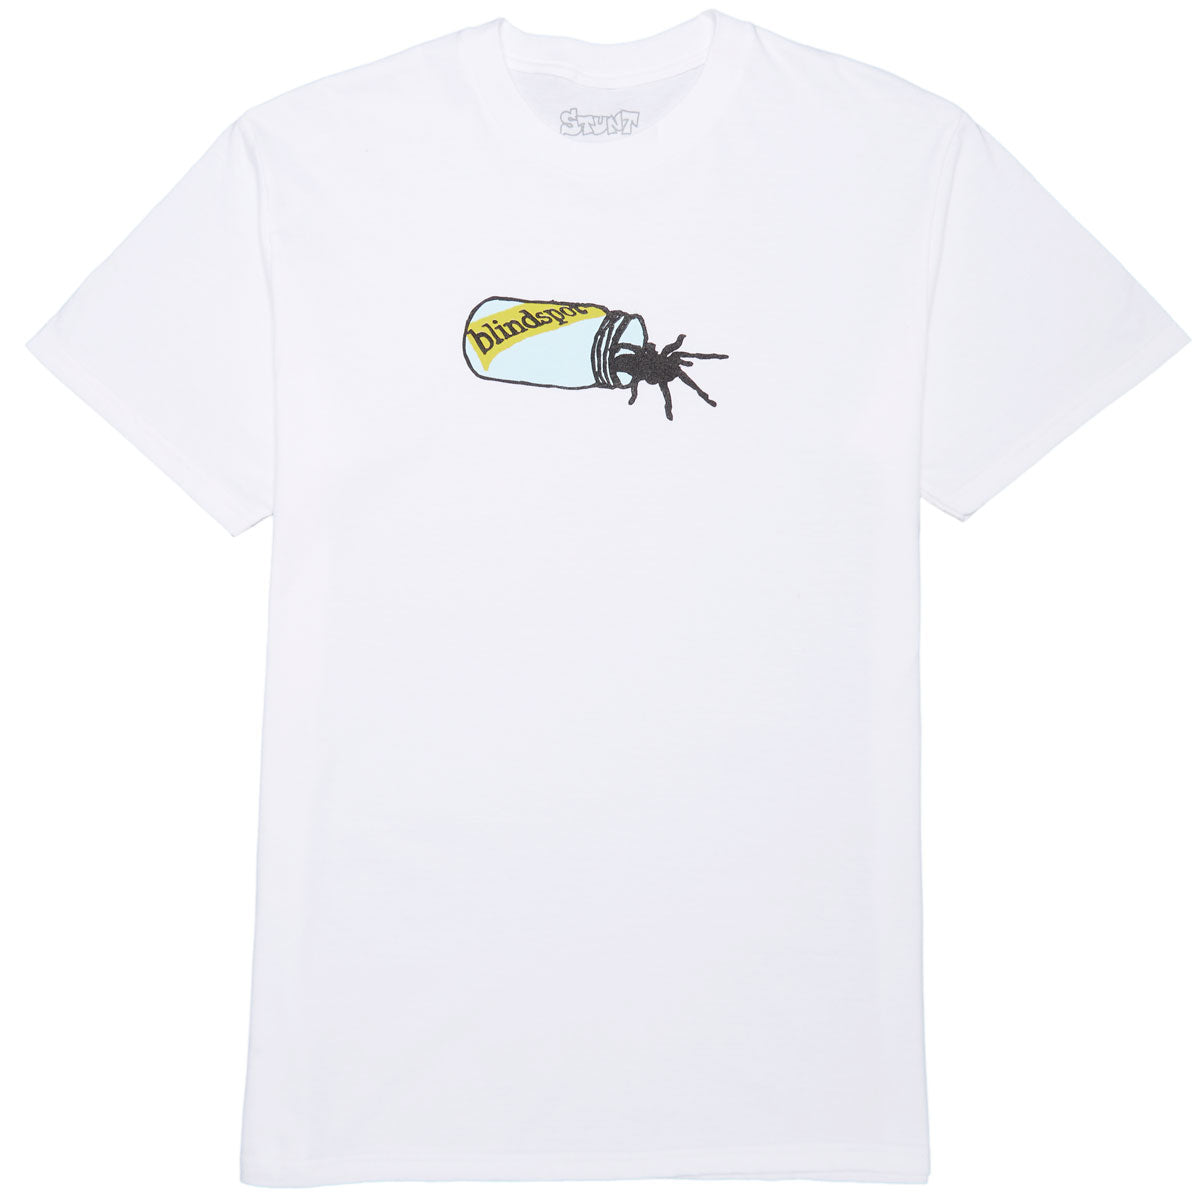 Stunt Spider Jar T-Shirt - White image 1